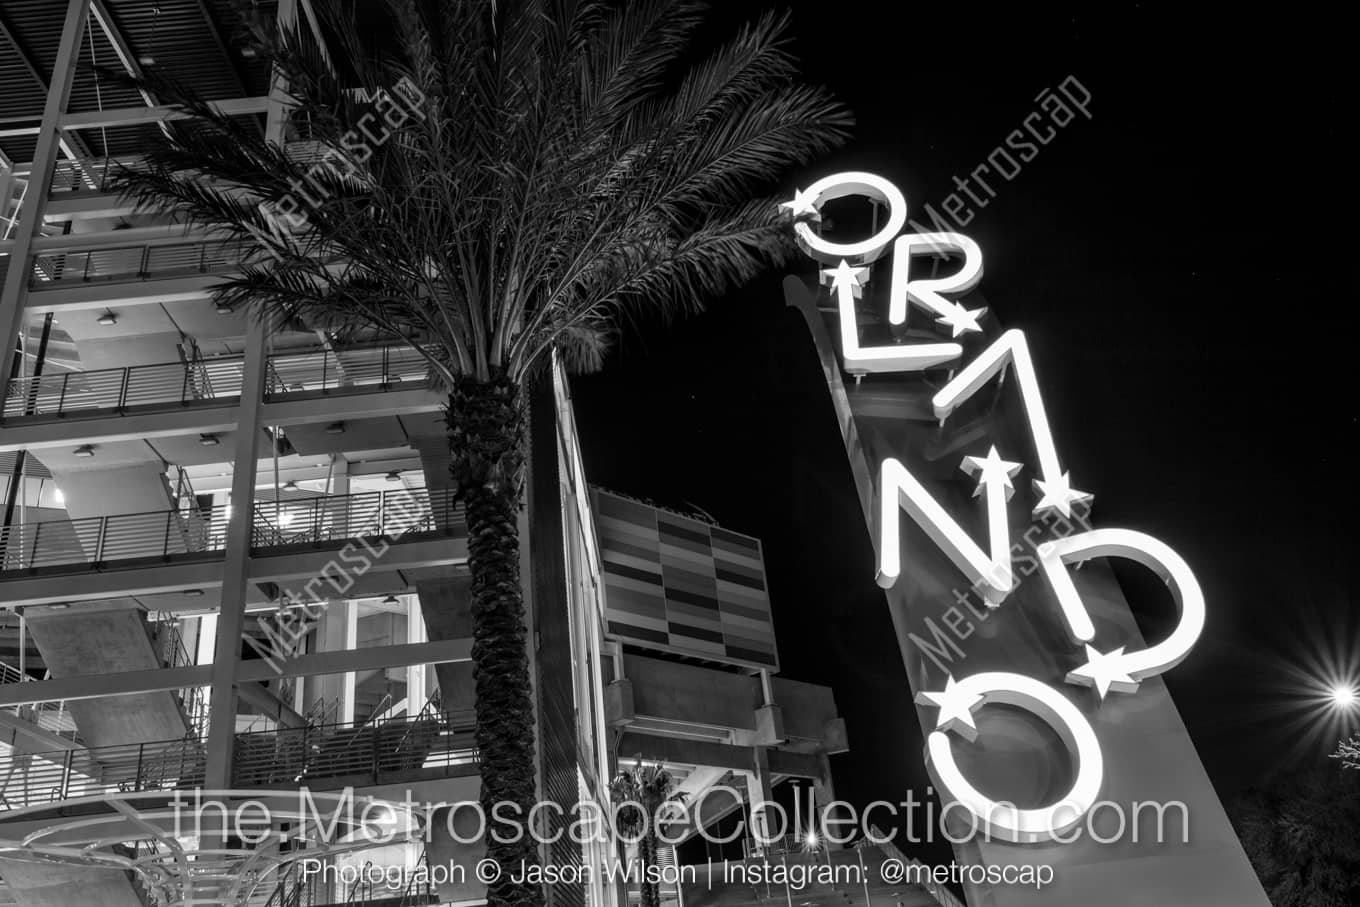 Orlando Florida Picture at Night